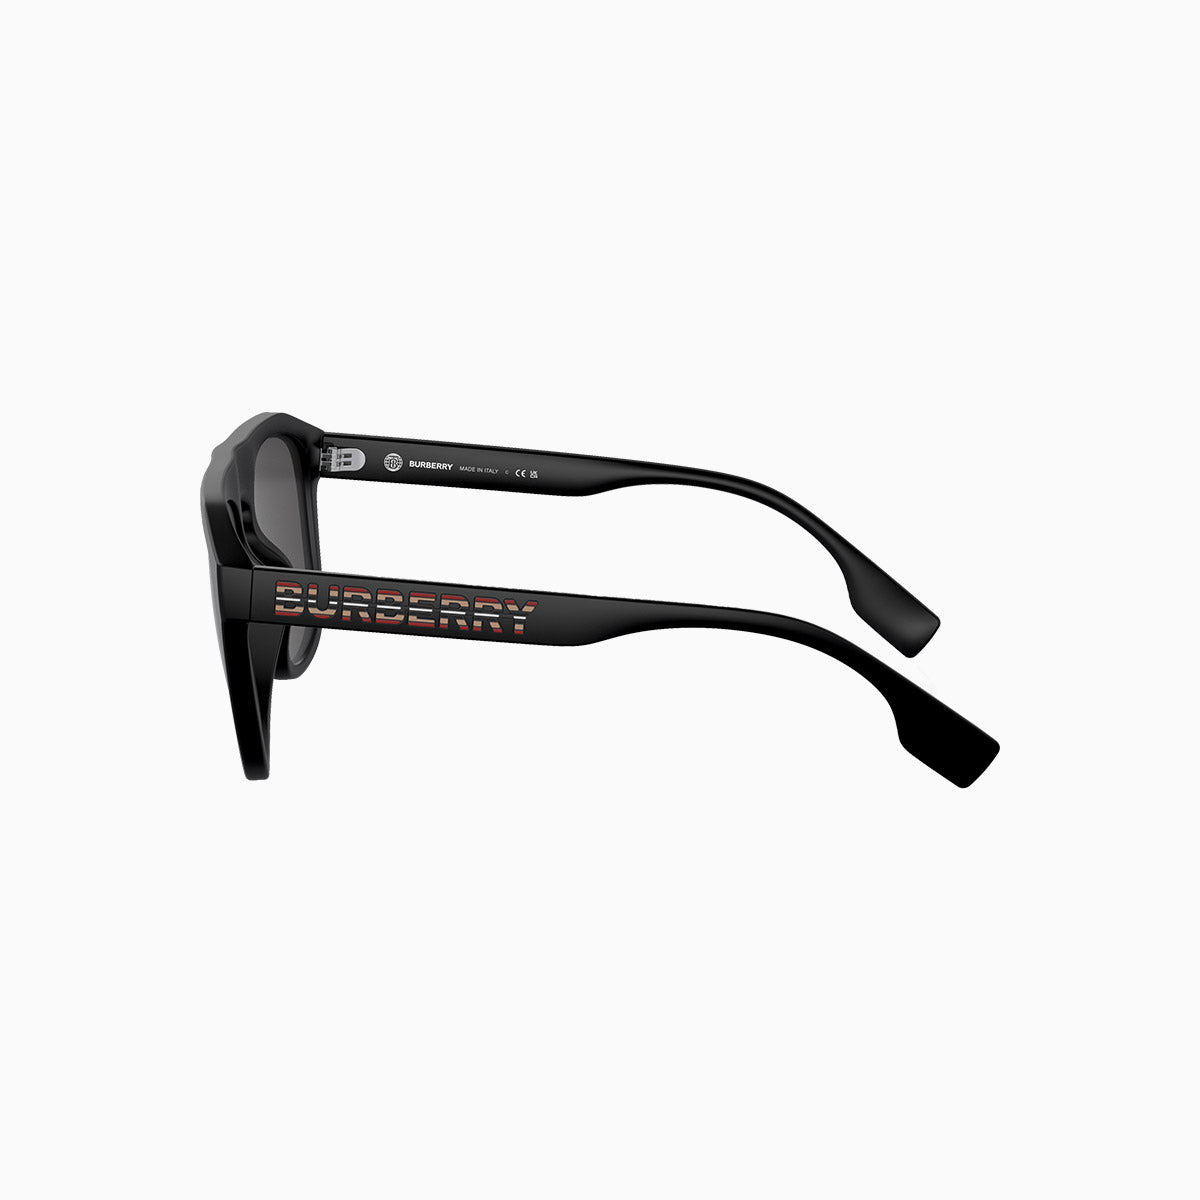 mens-burberry-wren-matte-black-sunglasses-0be4396u-346481